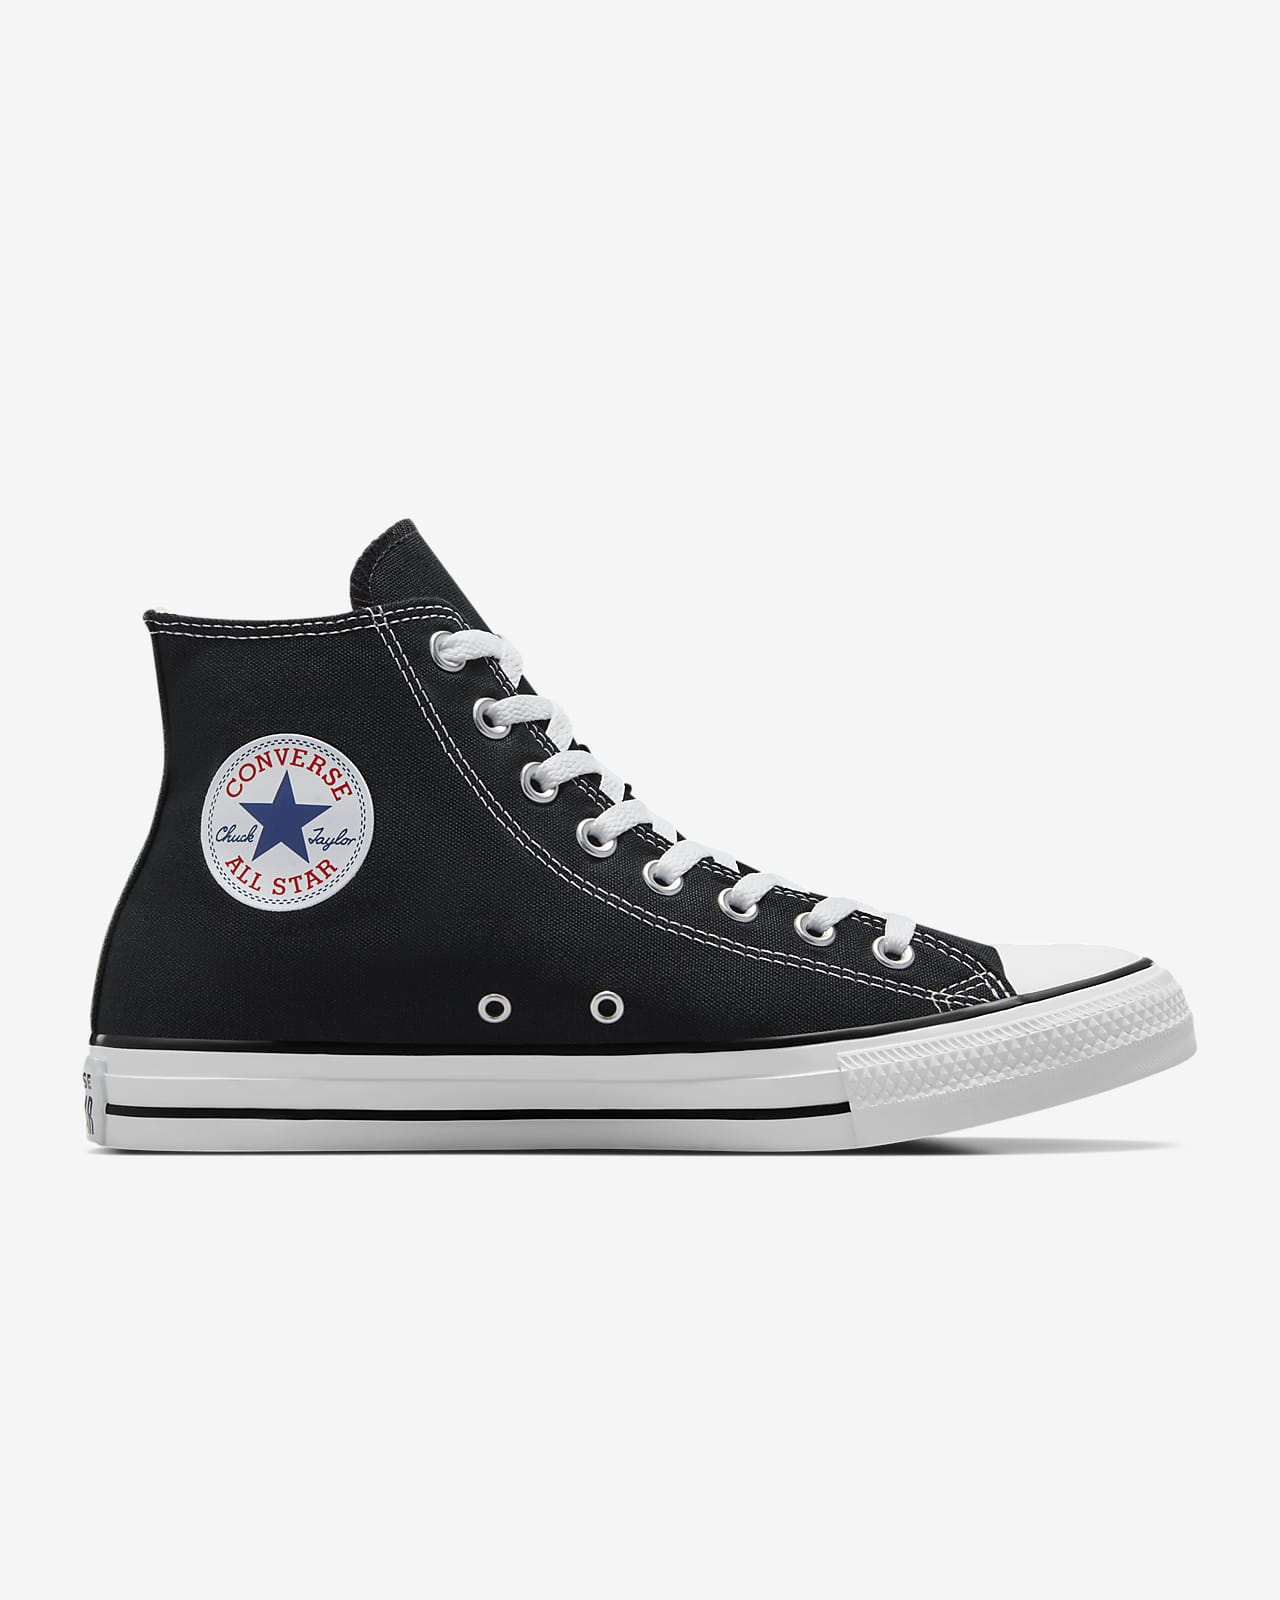 Touhou Onverenigbaar opmerking Converse Chuck Taylor All Star High Top Shoes. Nike.com